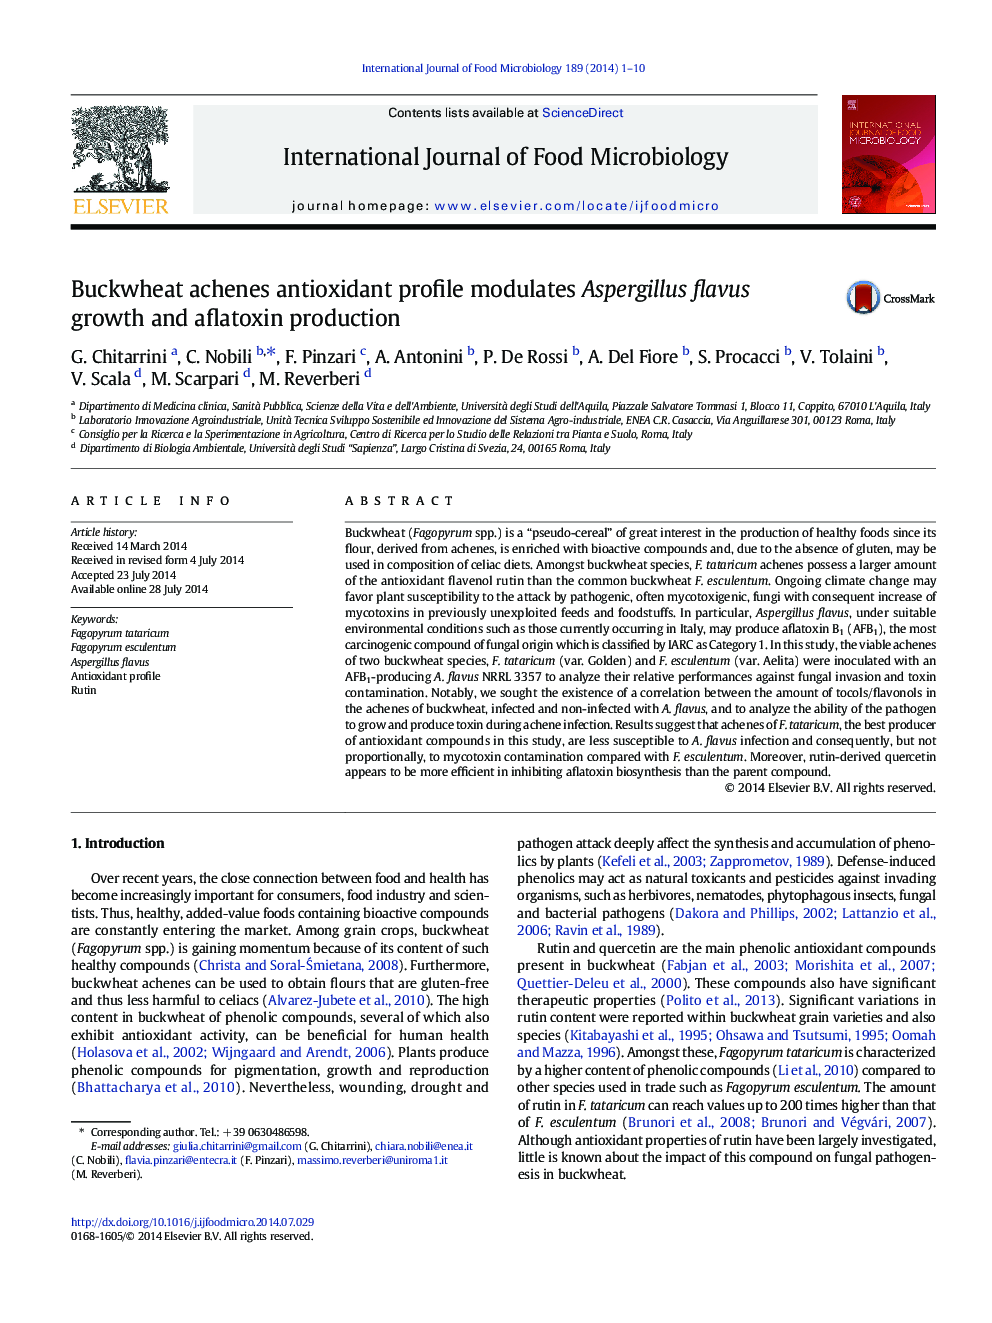 Buckwheat achenes antioxidant profile modulates Aspergillus flavus growth and aflatoxin production